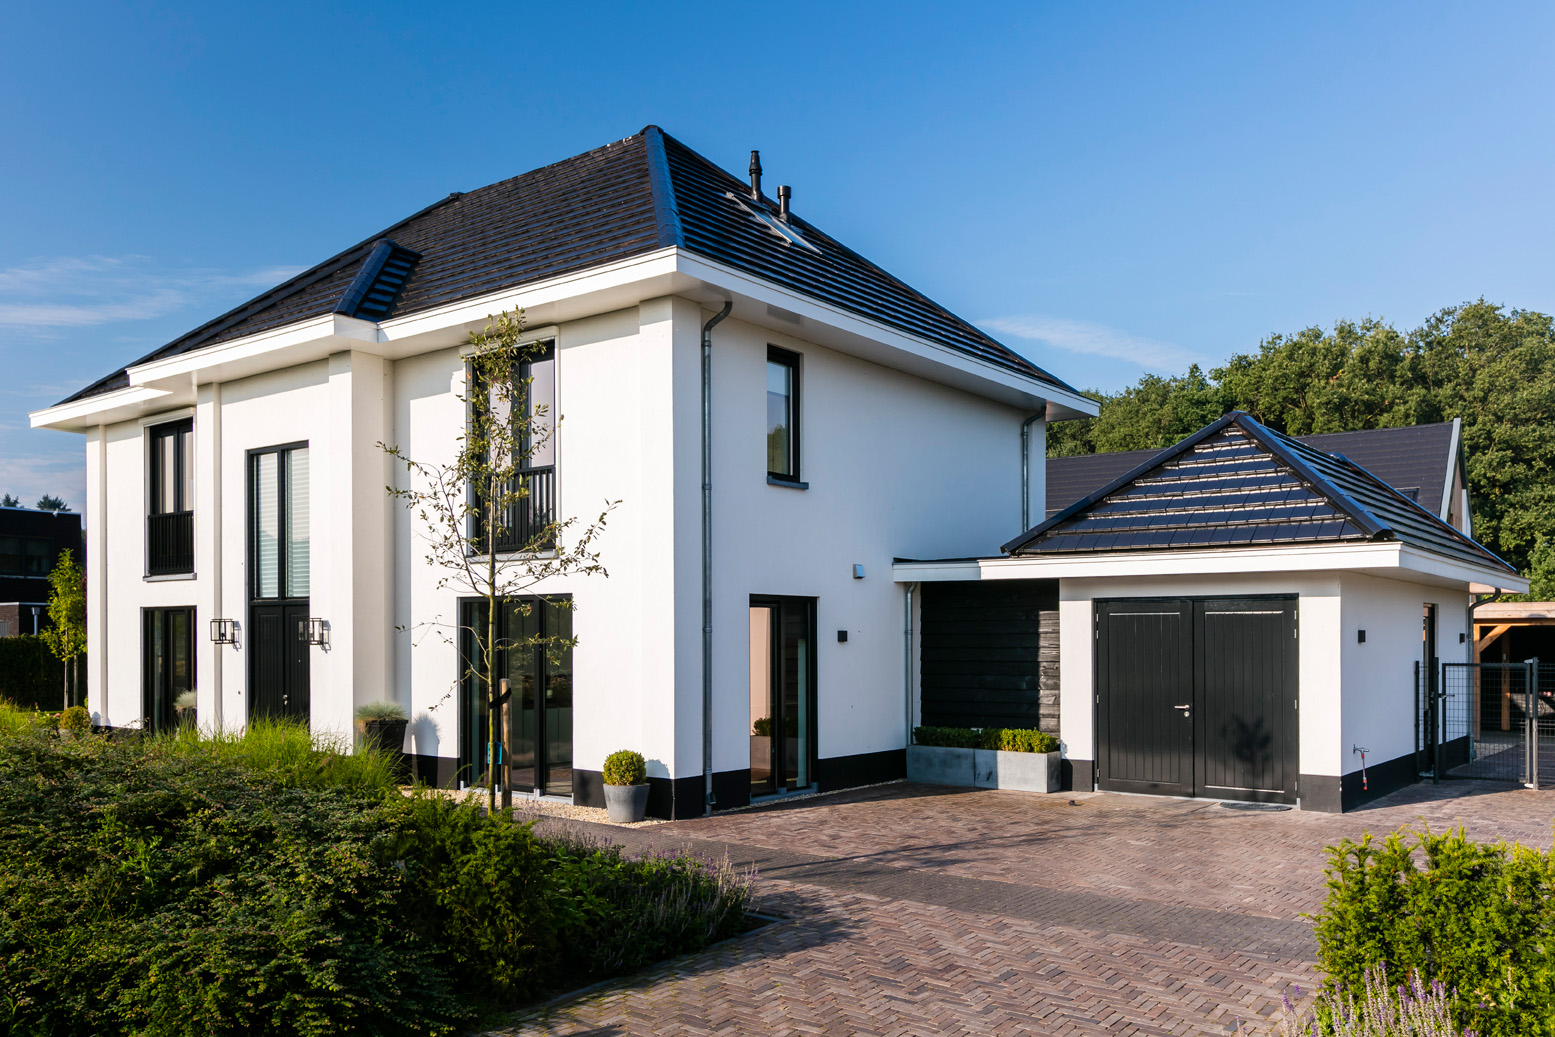 Foto: Woning bouwen   Huis bouwen   Villa Lindepijlstaart te Zwolle   Architectuurwonen 6